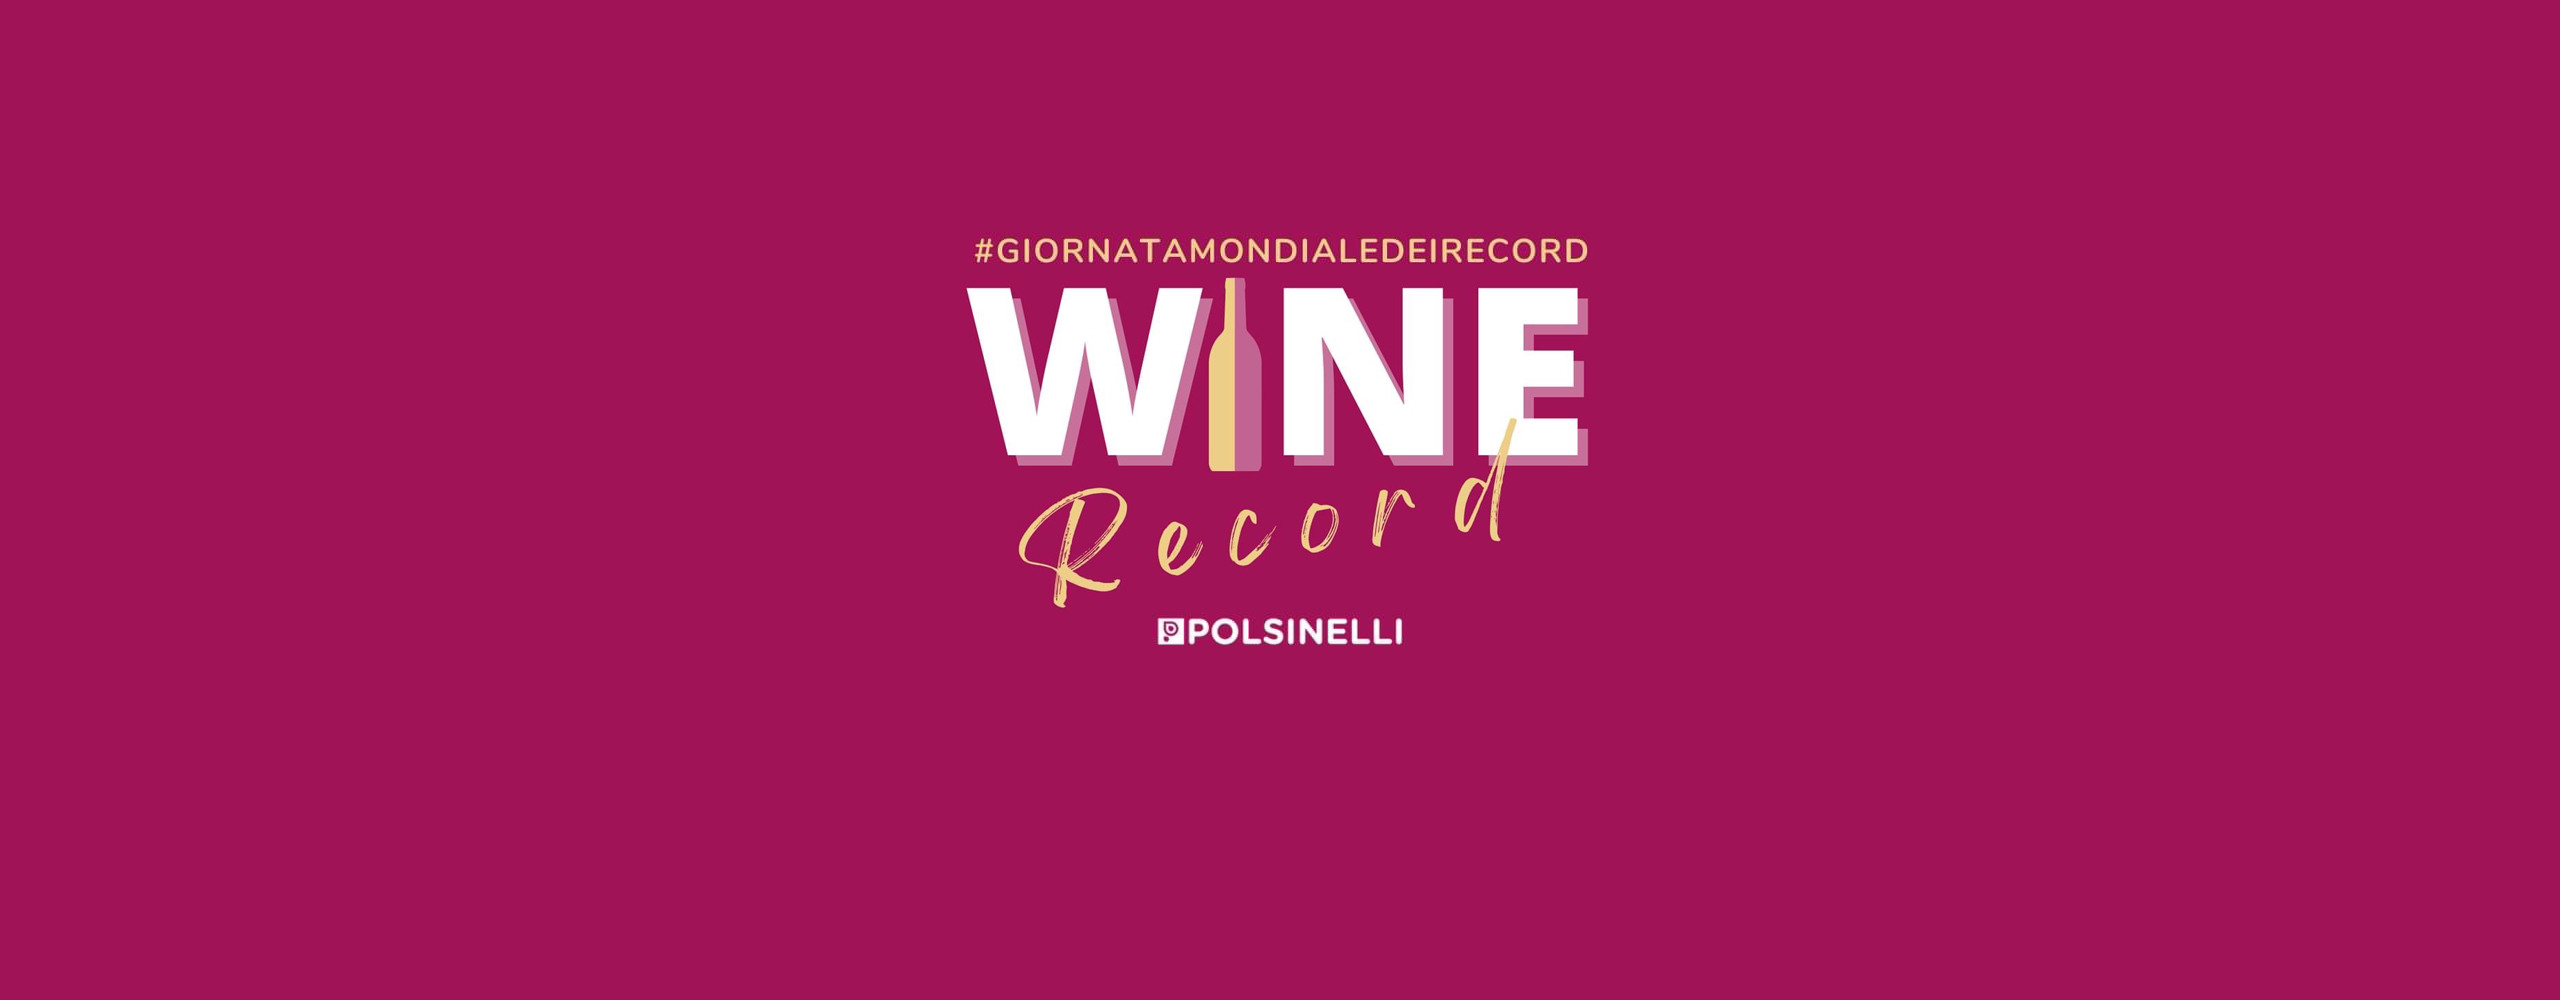 Wine Record